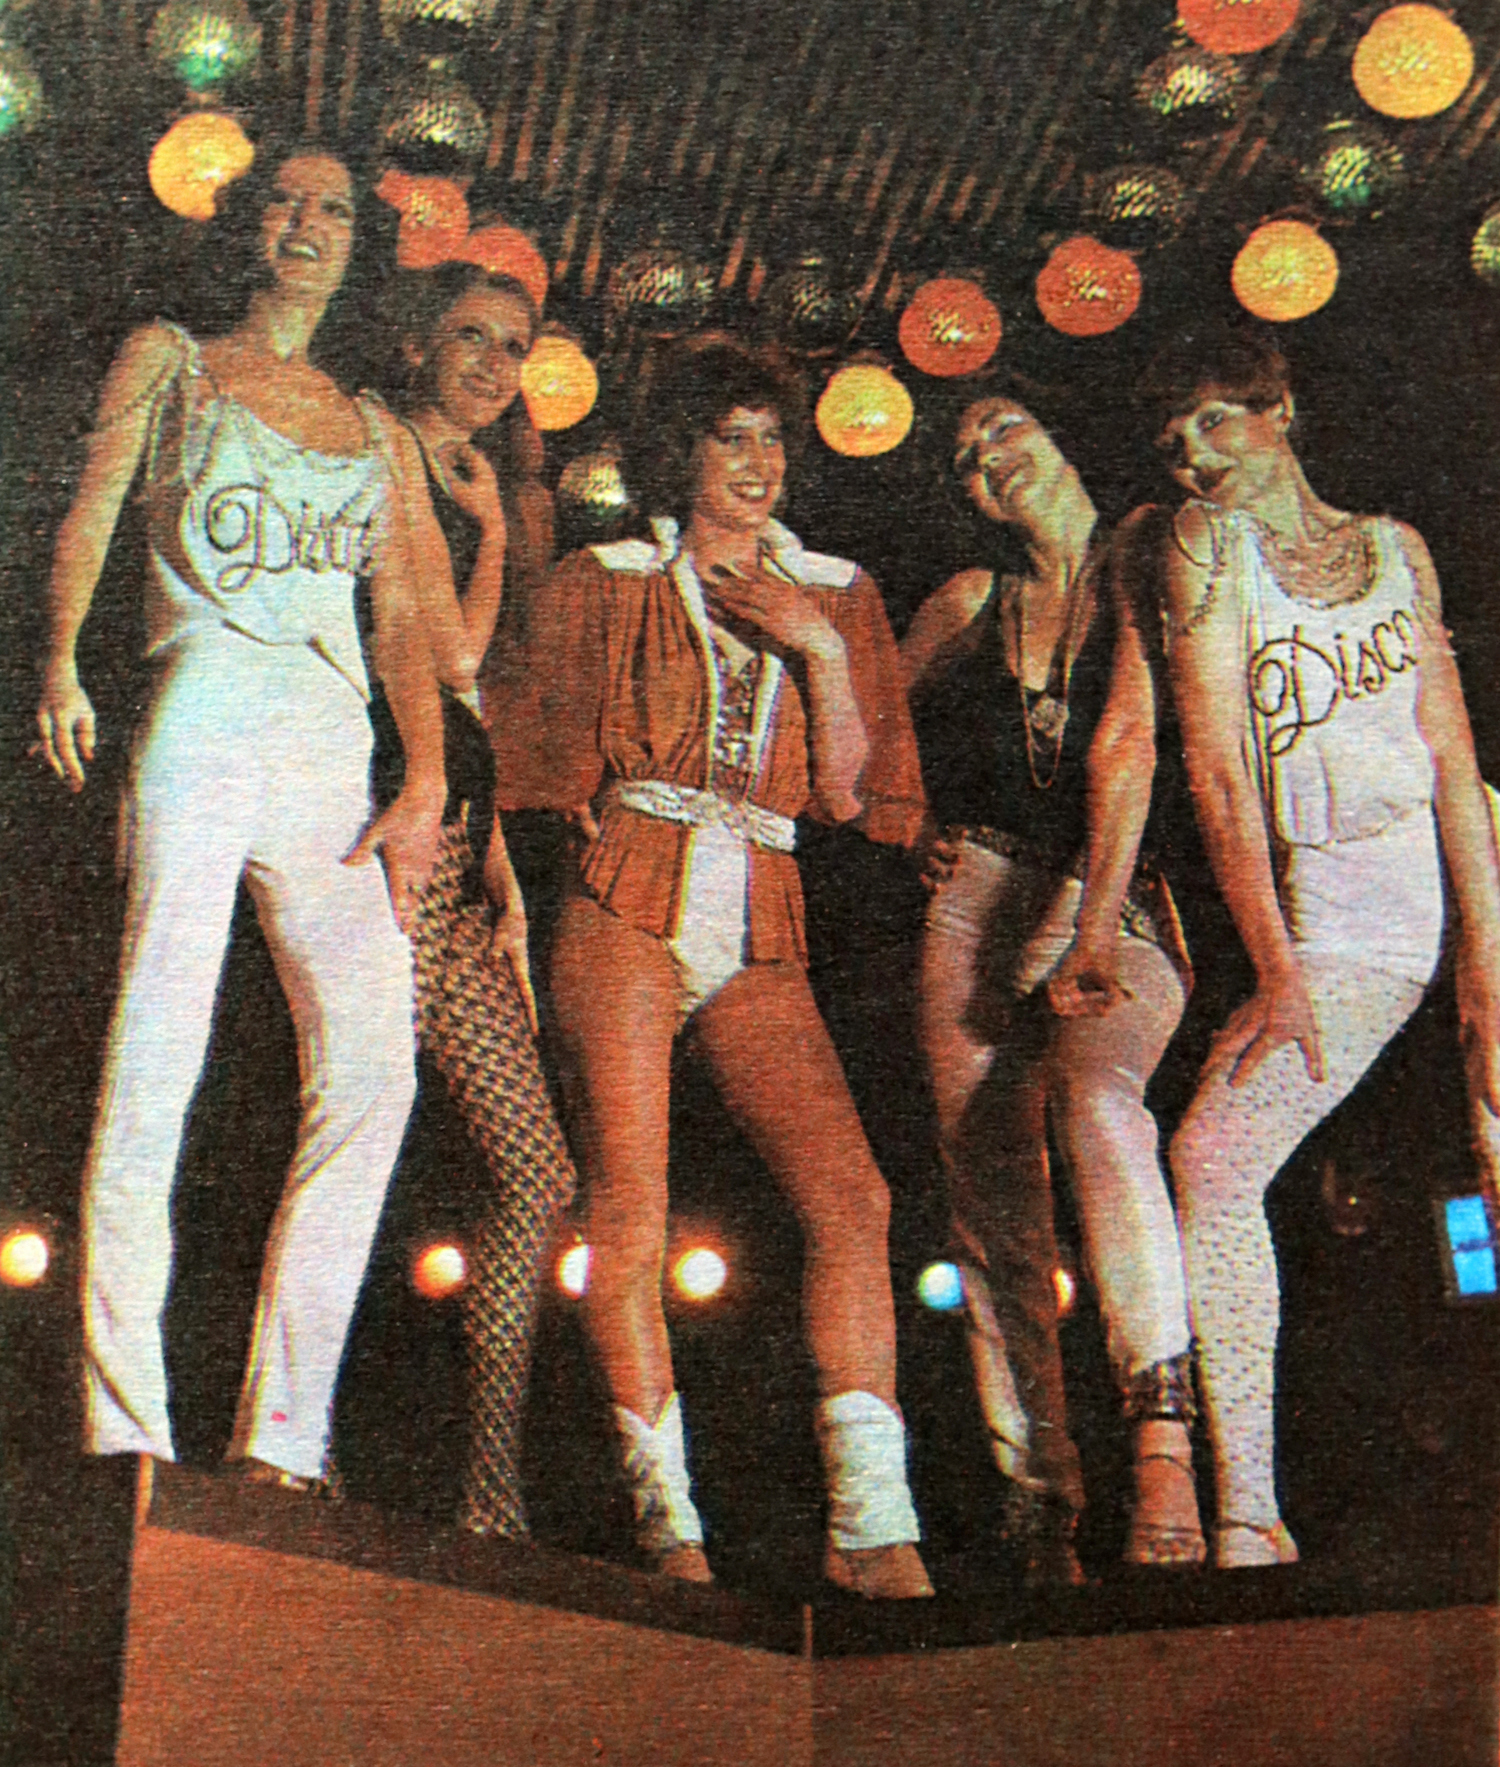 Dancers in the Viru Hotel nightclub in the 1980s